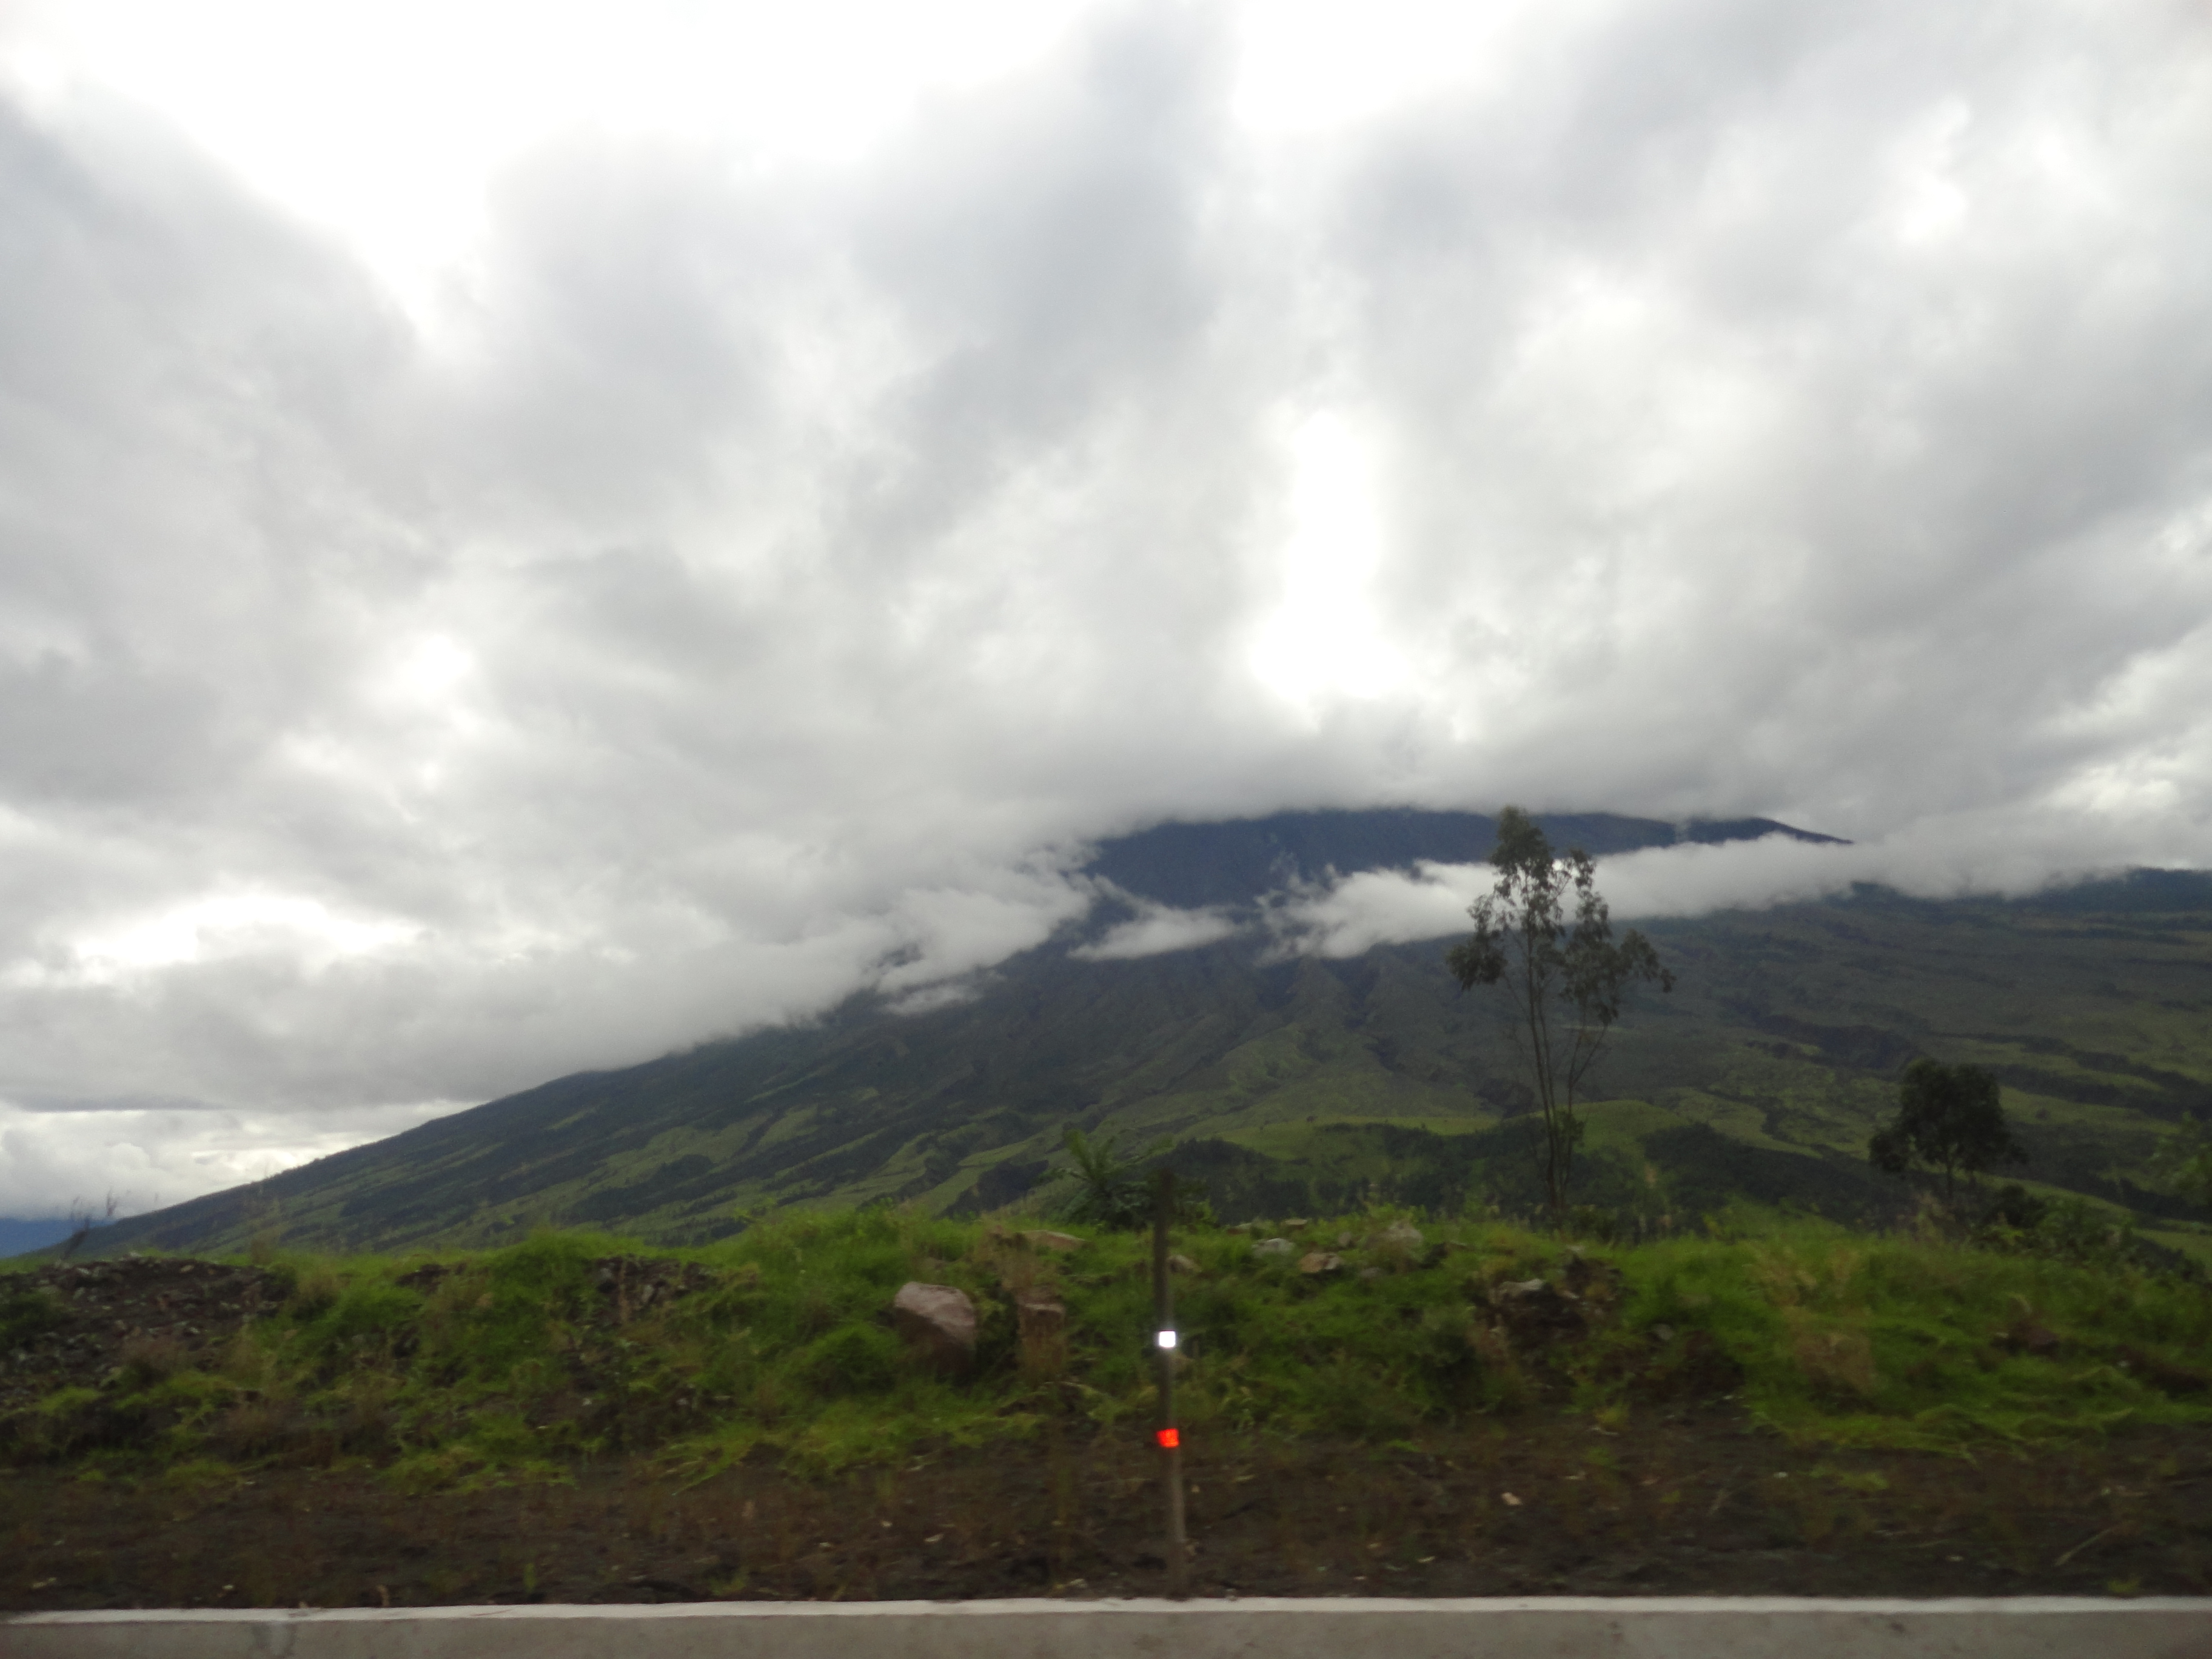 Foto: Carretera - Pelileo (Tungurahua), Ecuador